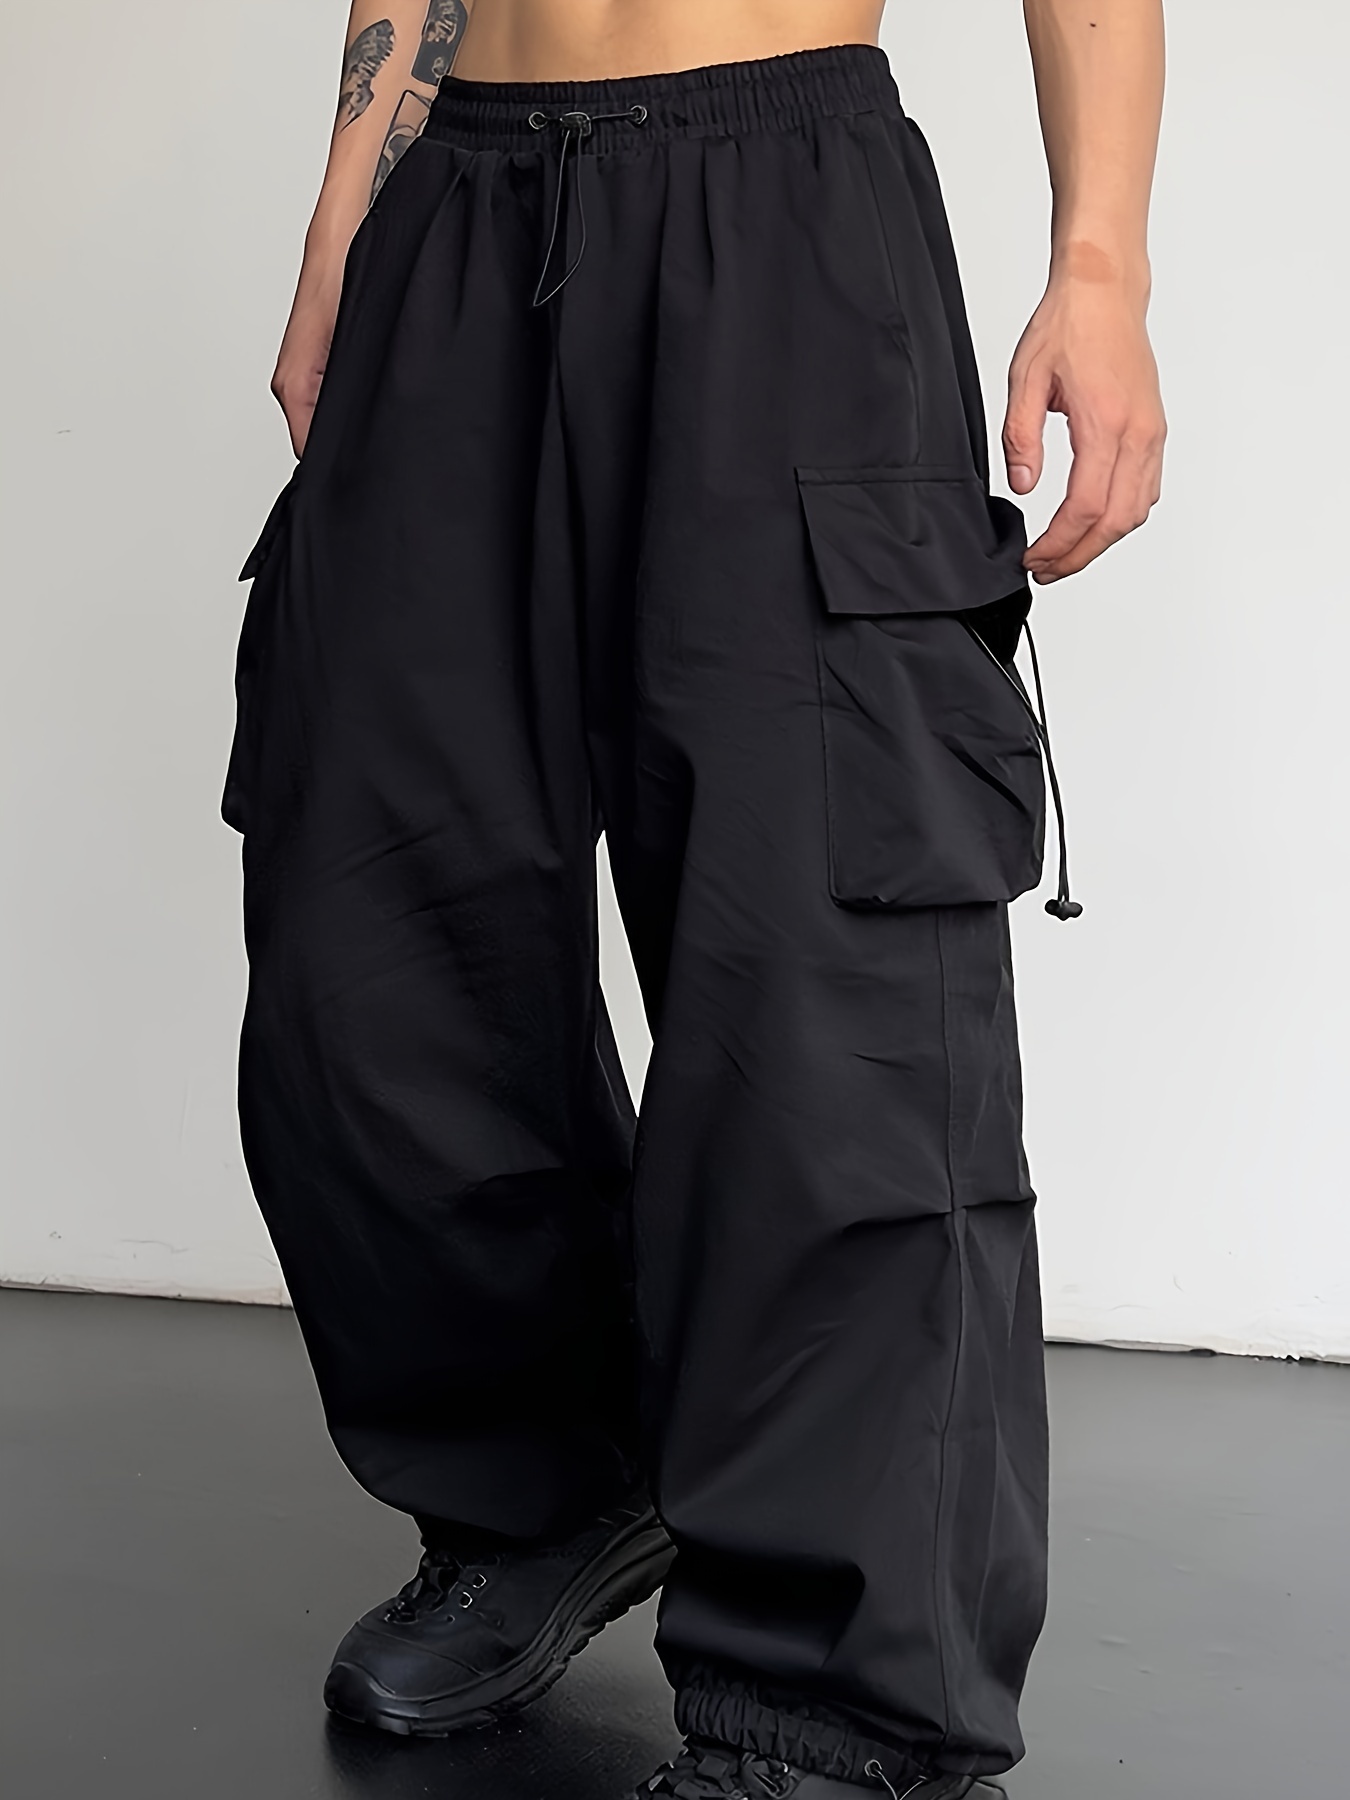 Men Trousers Elastic Waist Men Cargo Pants Casual Clothes, Black, Medium :  : Clothing, Shoes & Accessories